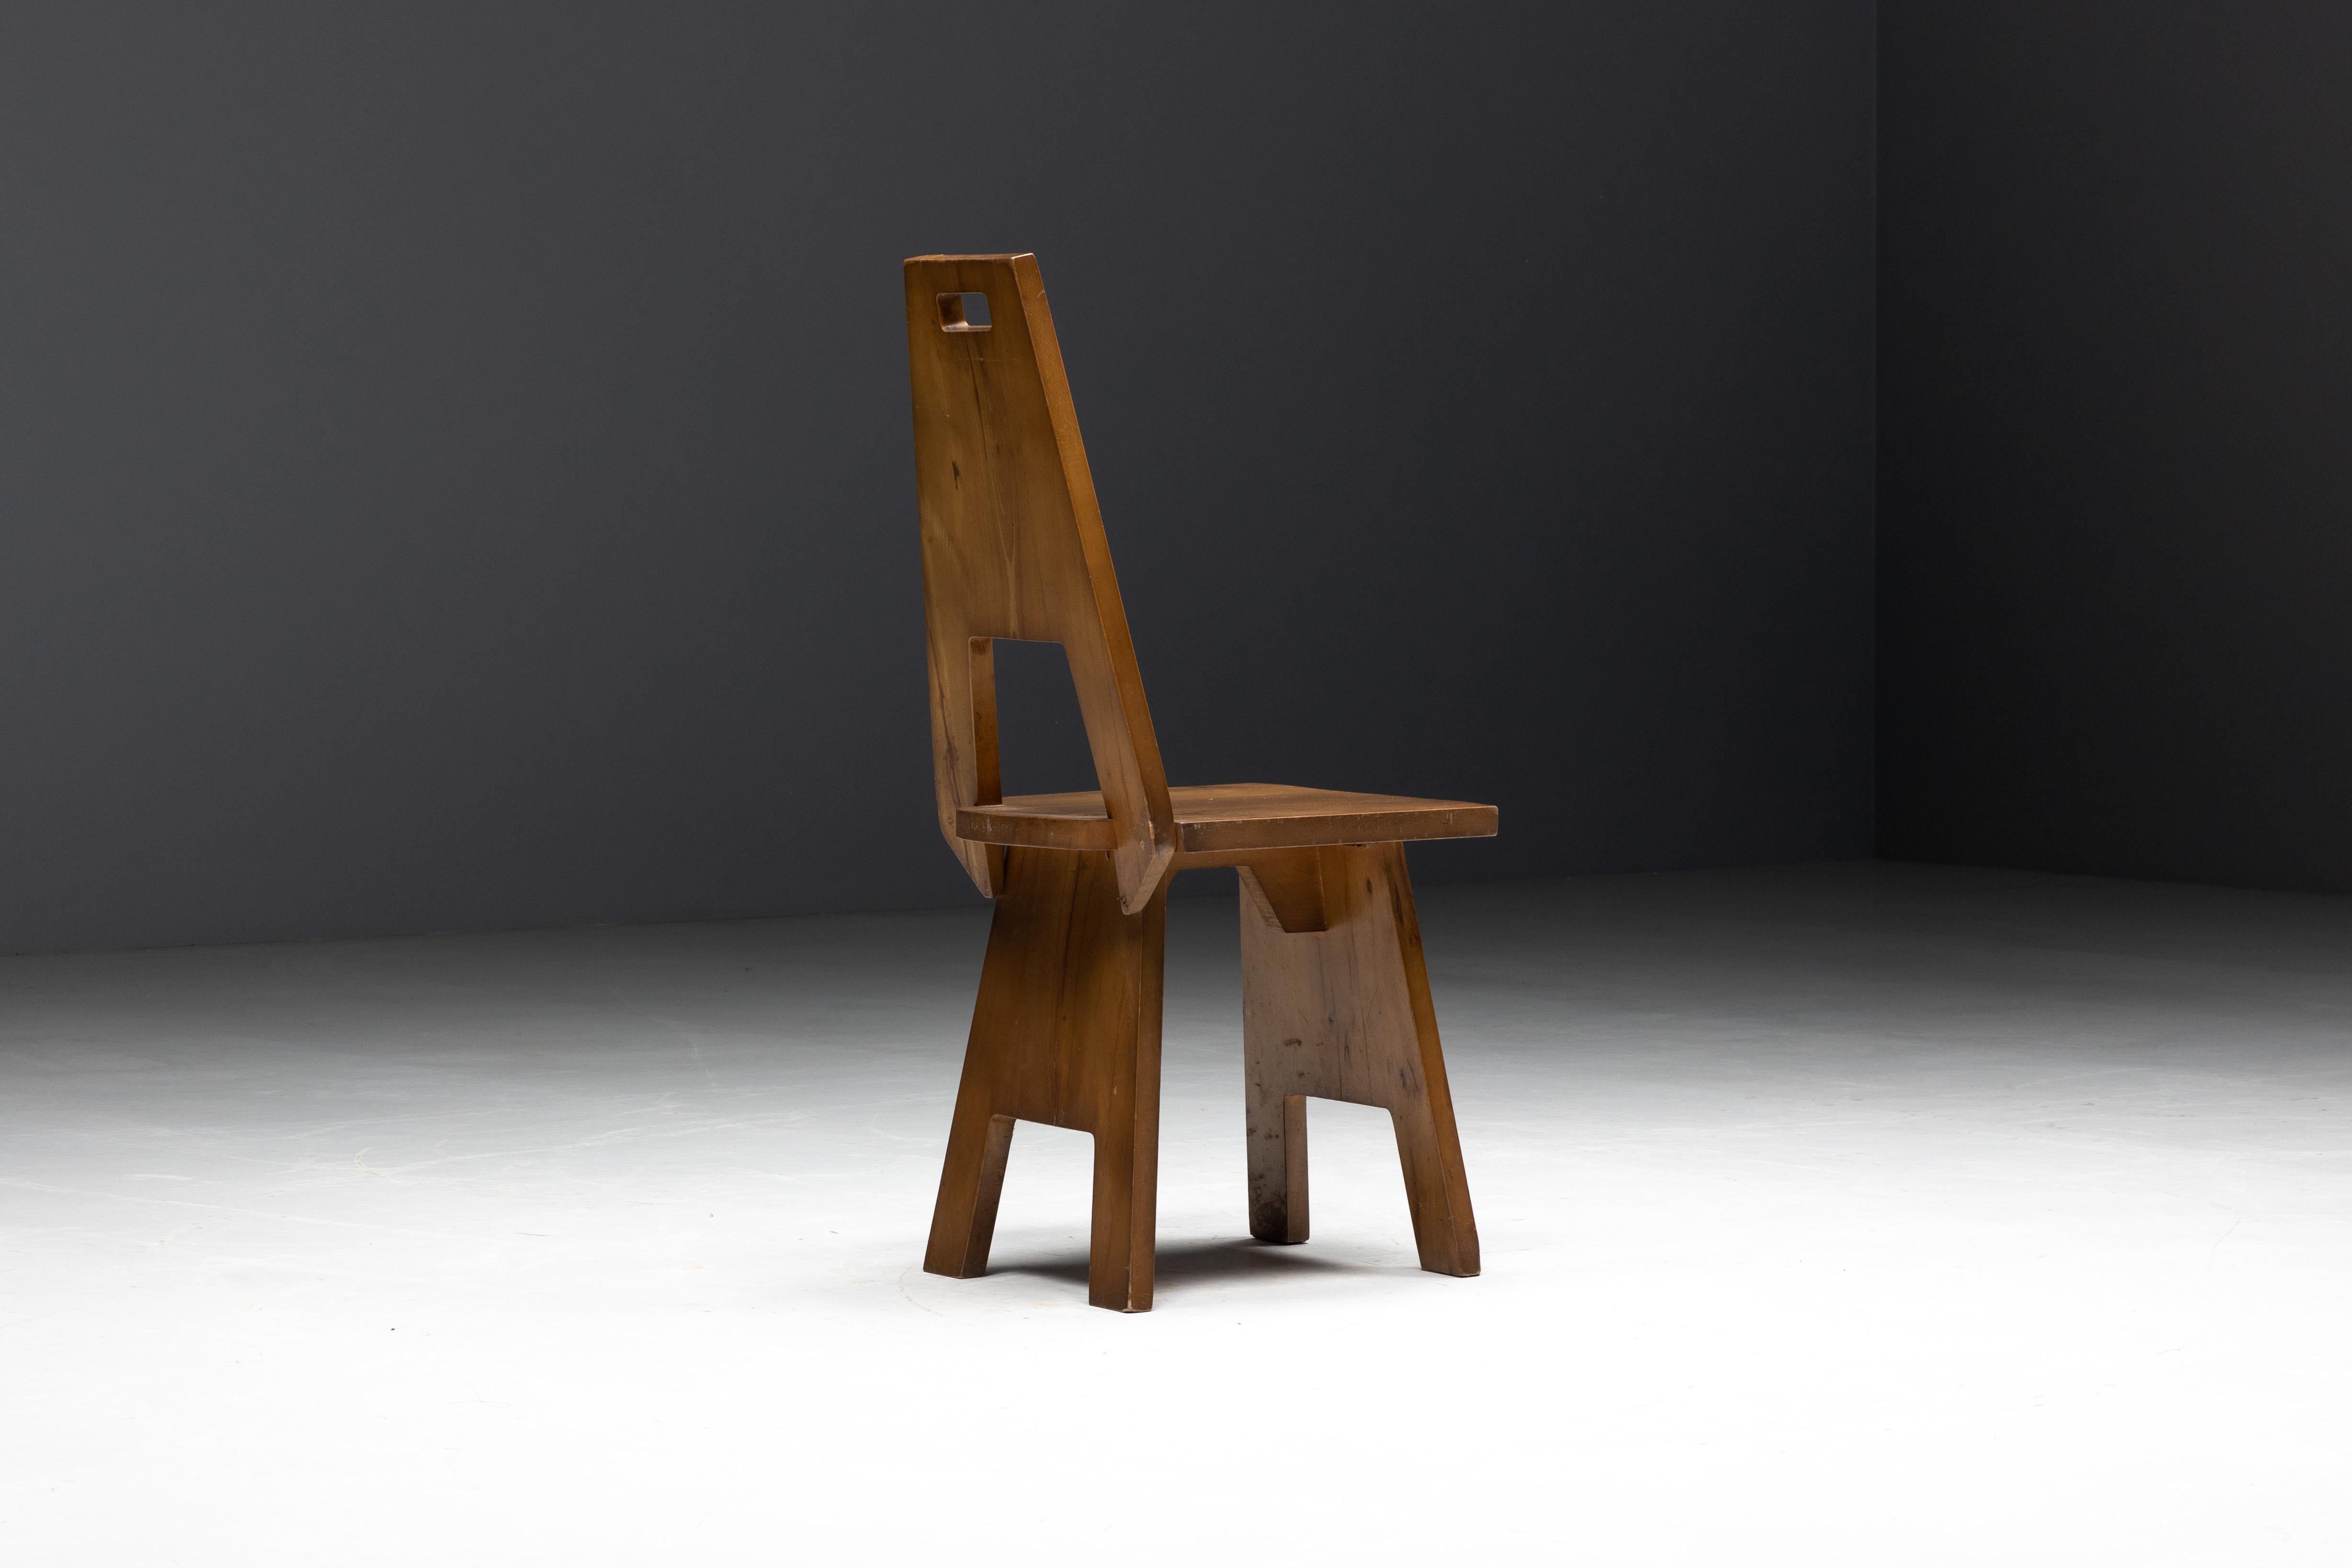 Sculptural Brutalist Wabi Sabi Chairs, Netherlands, 1960s For Sale 9